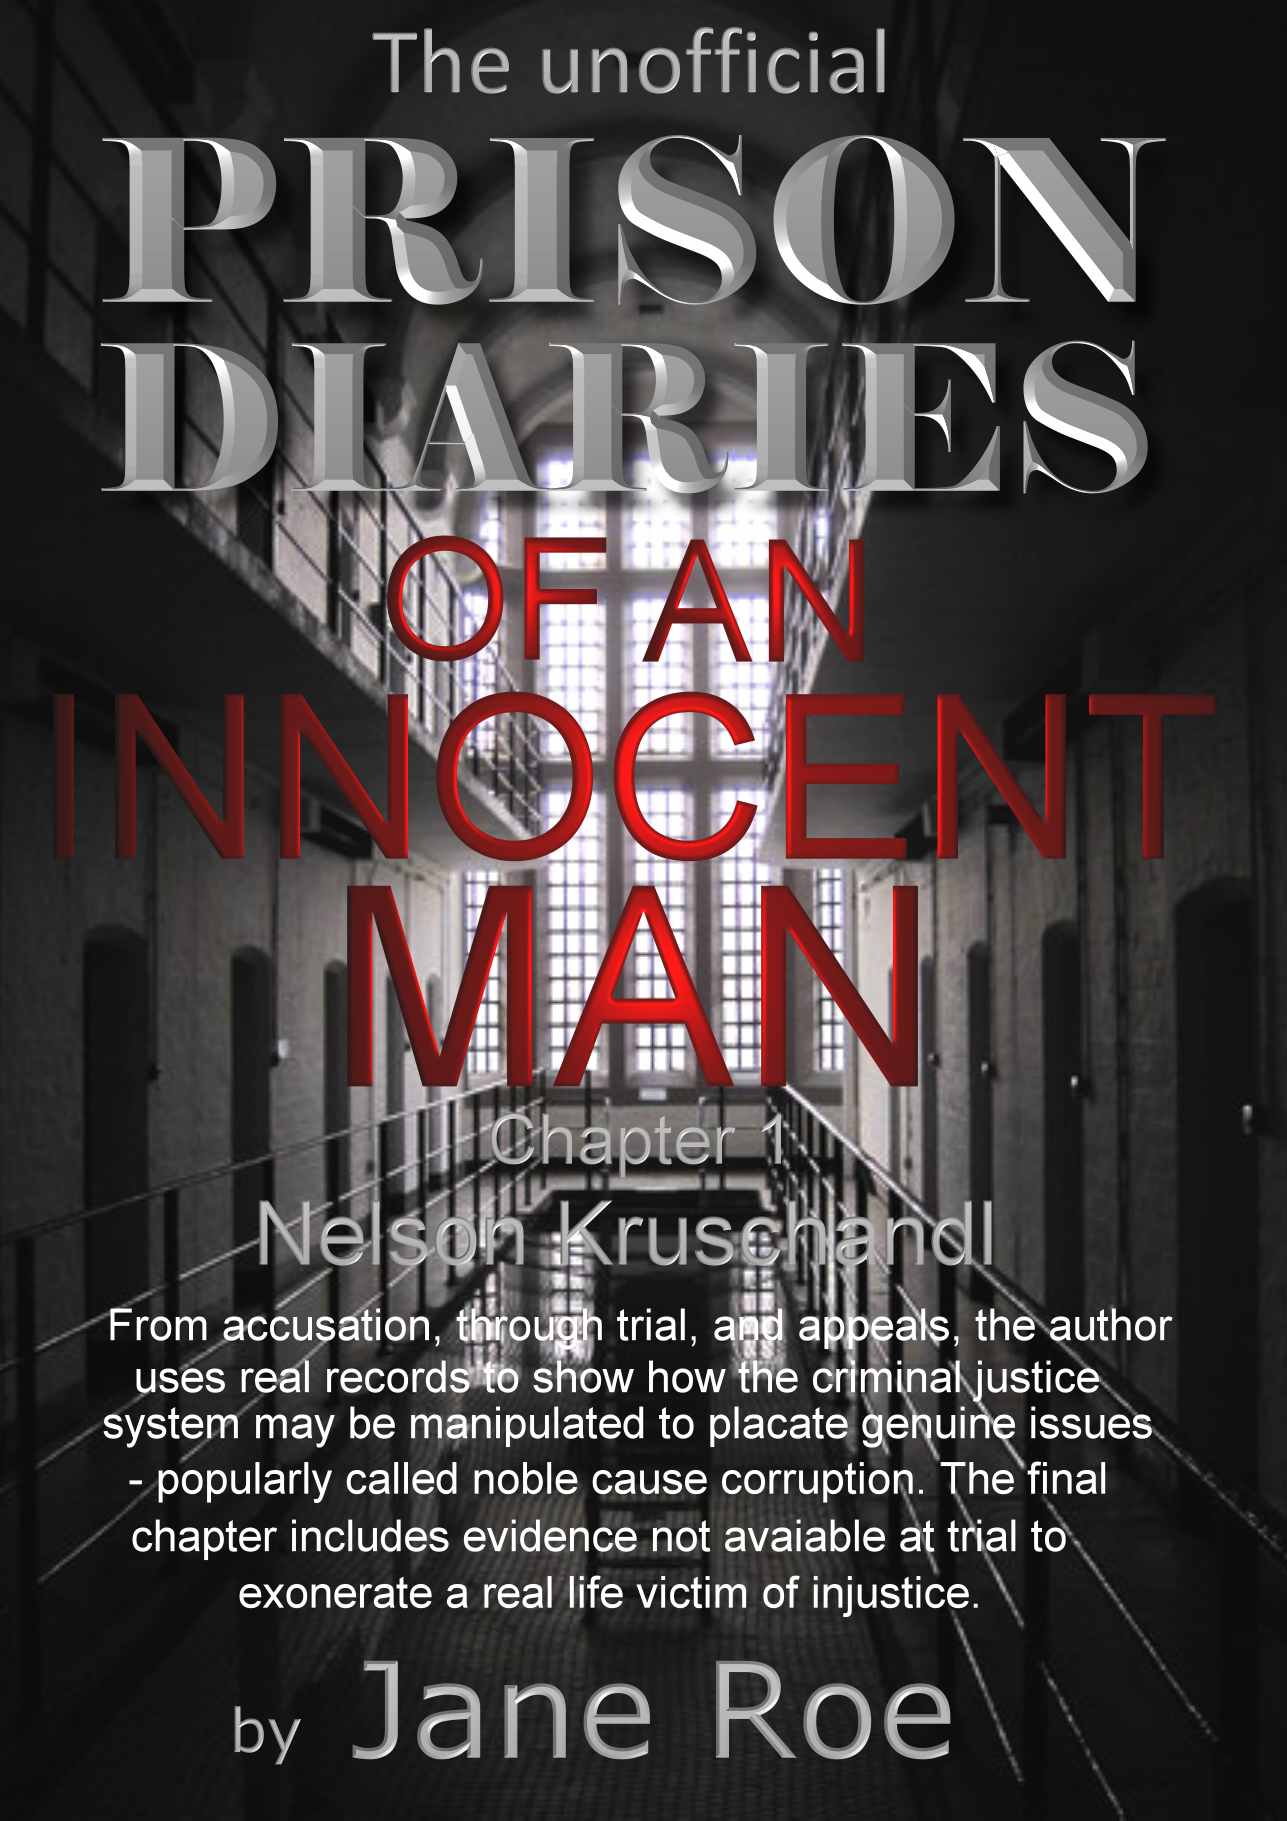 Prison Diaries, Chapter one, Crucifixion, Nelson Kruschandl - An Innocent Man